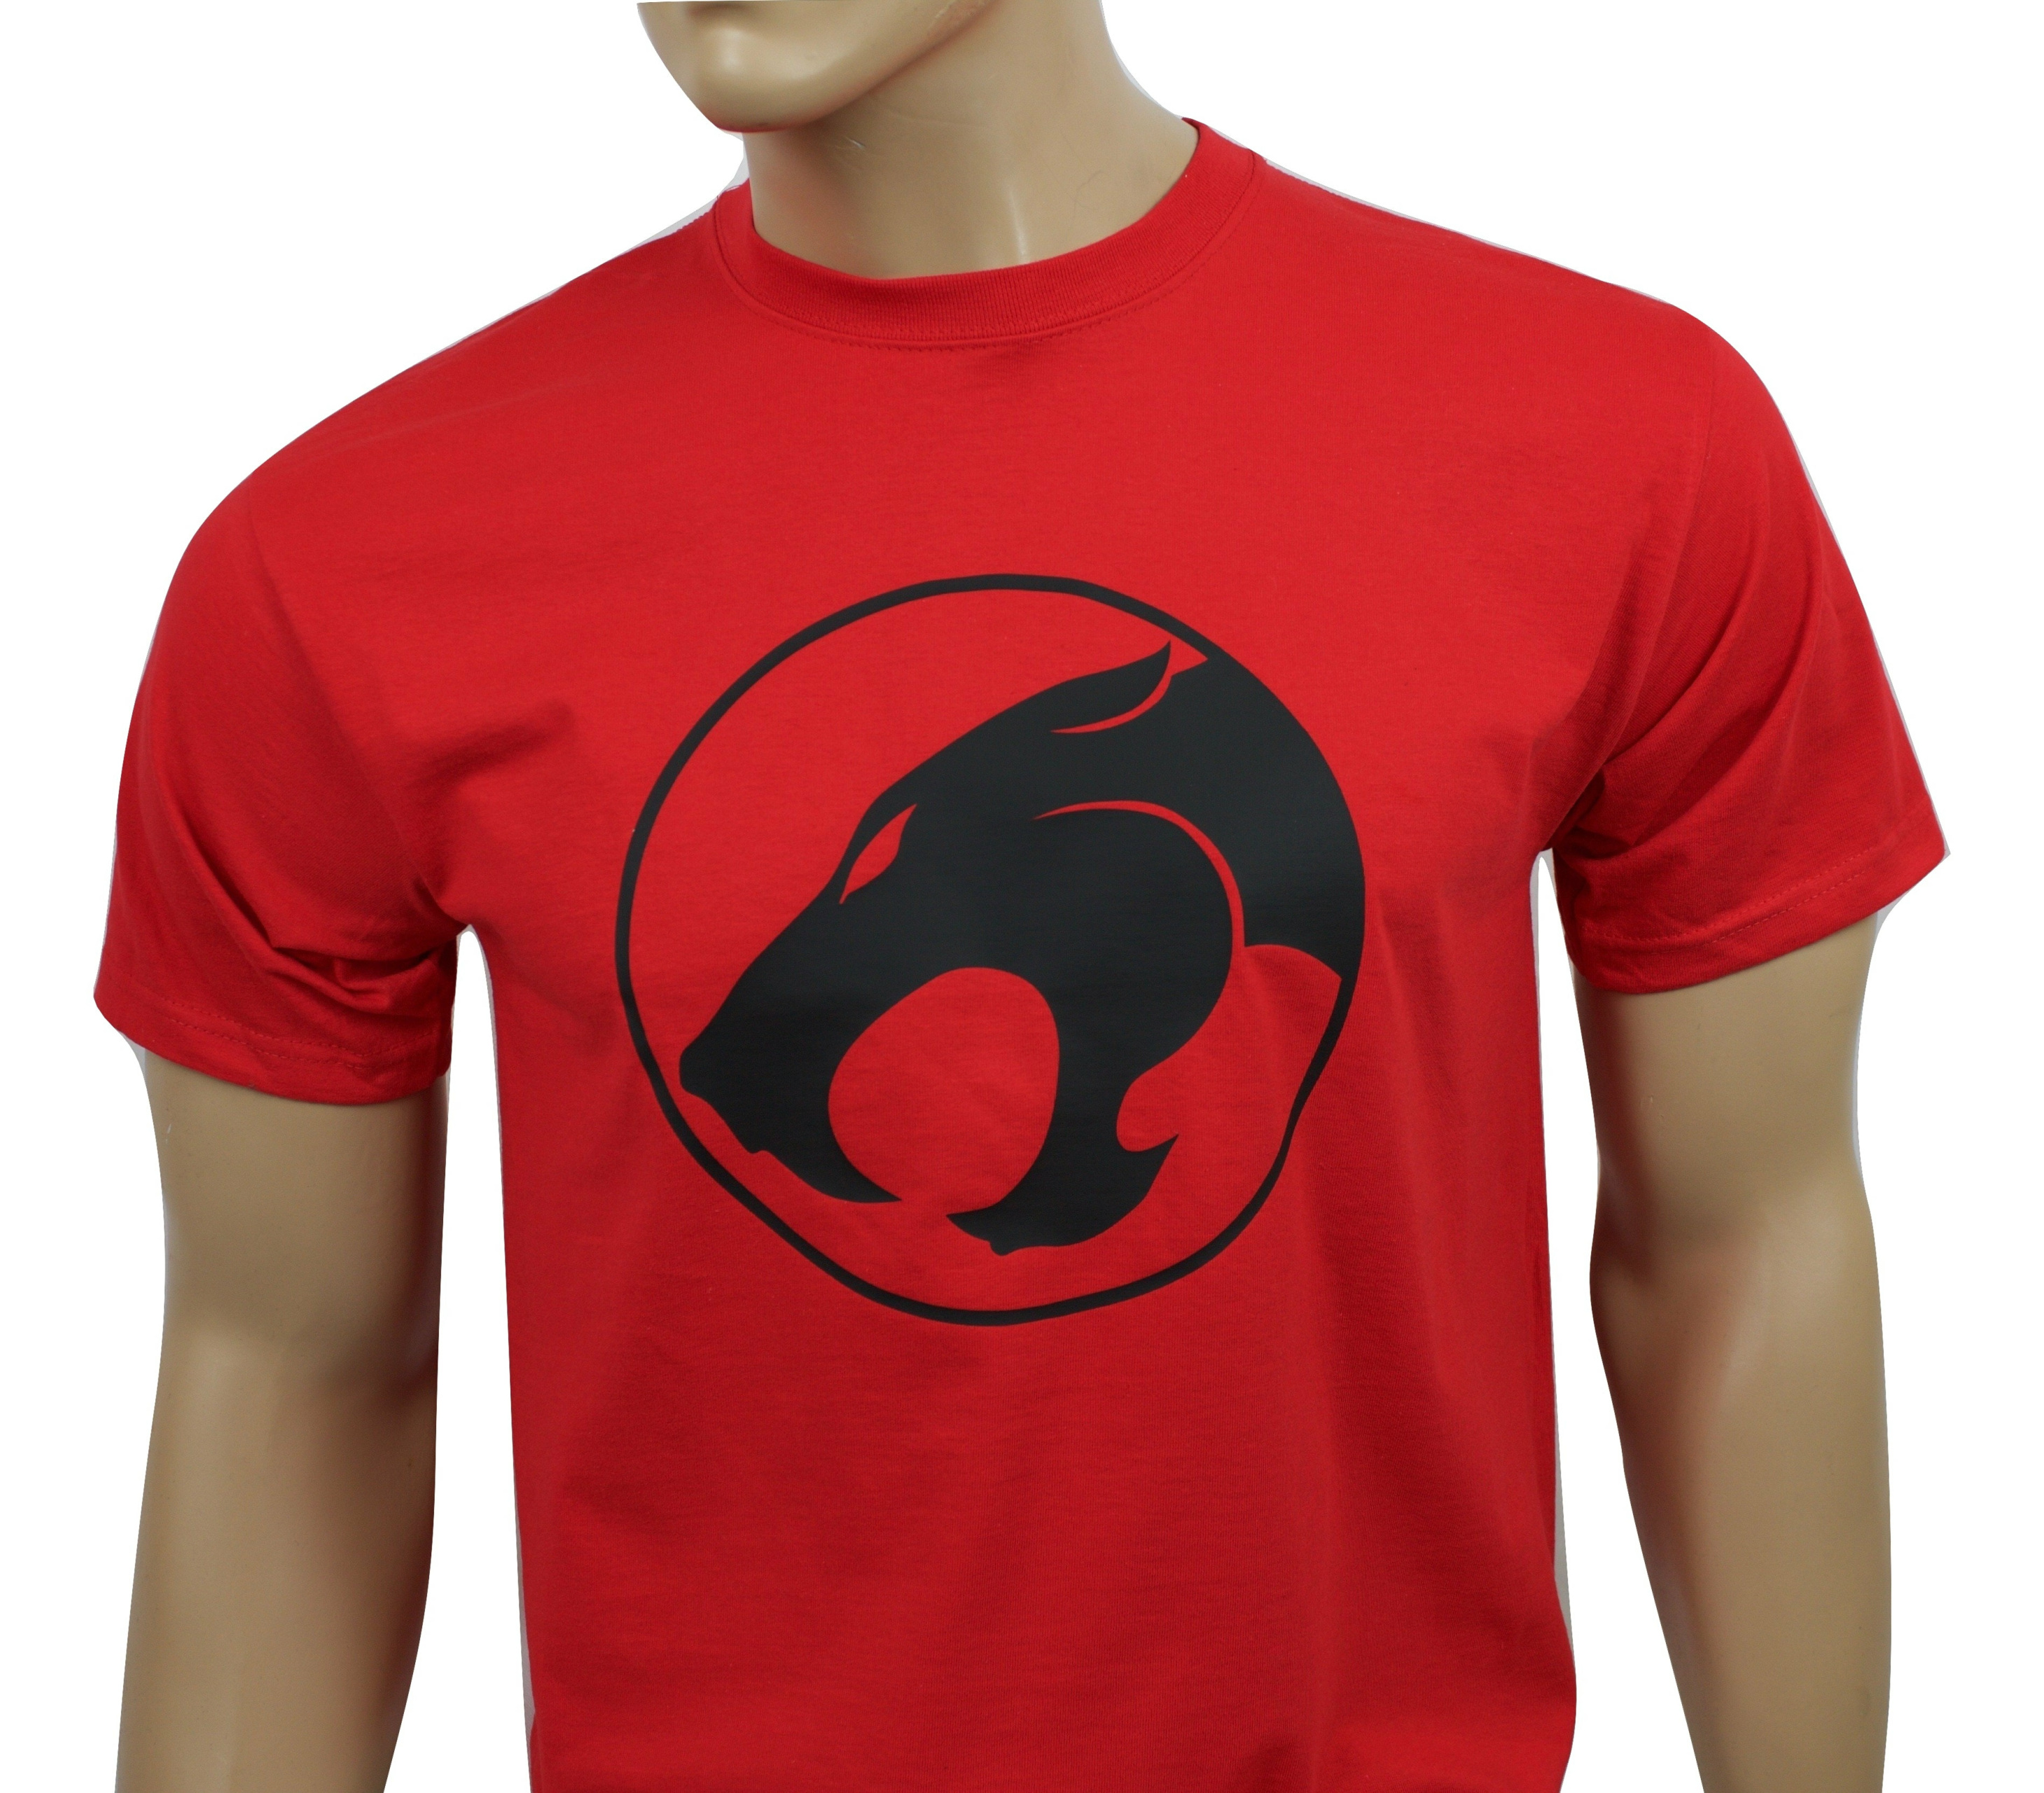 Thundercats Inspired T Shirt By Unit 13 Originals